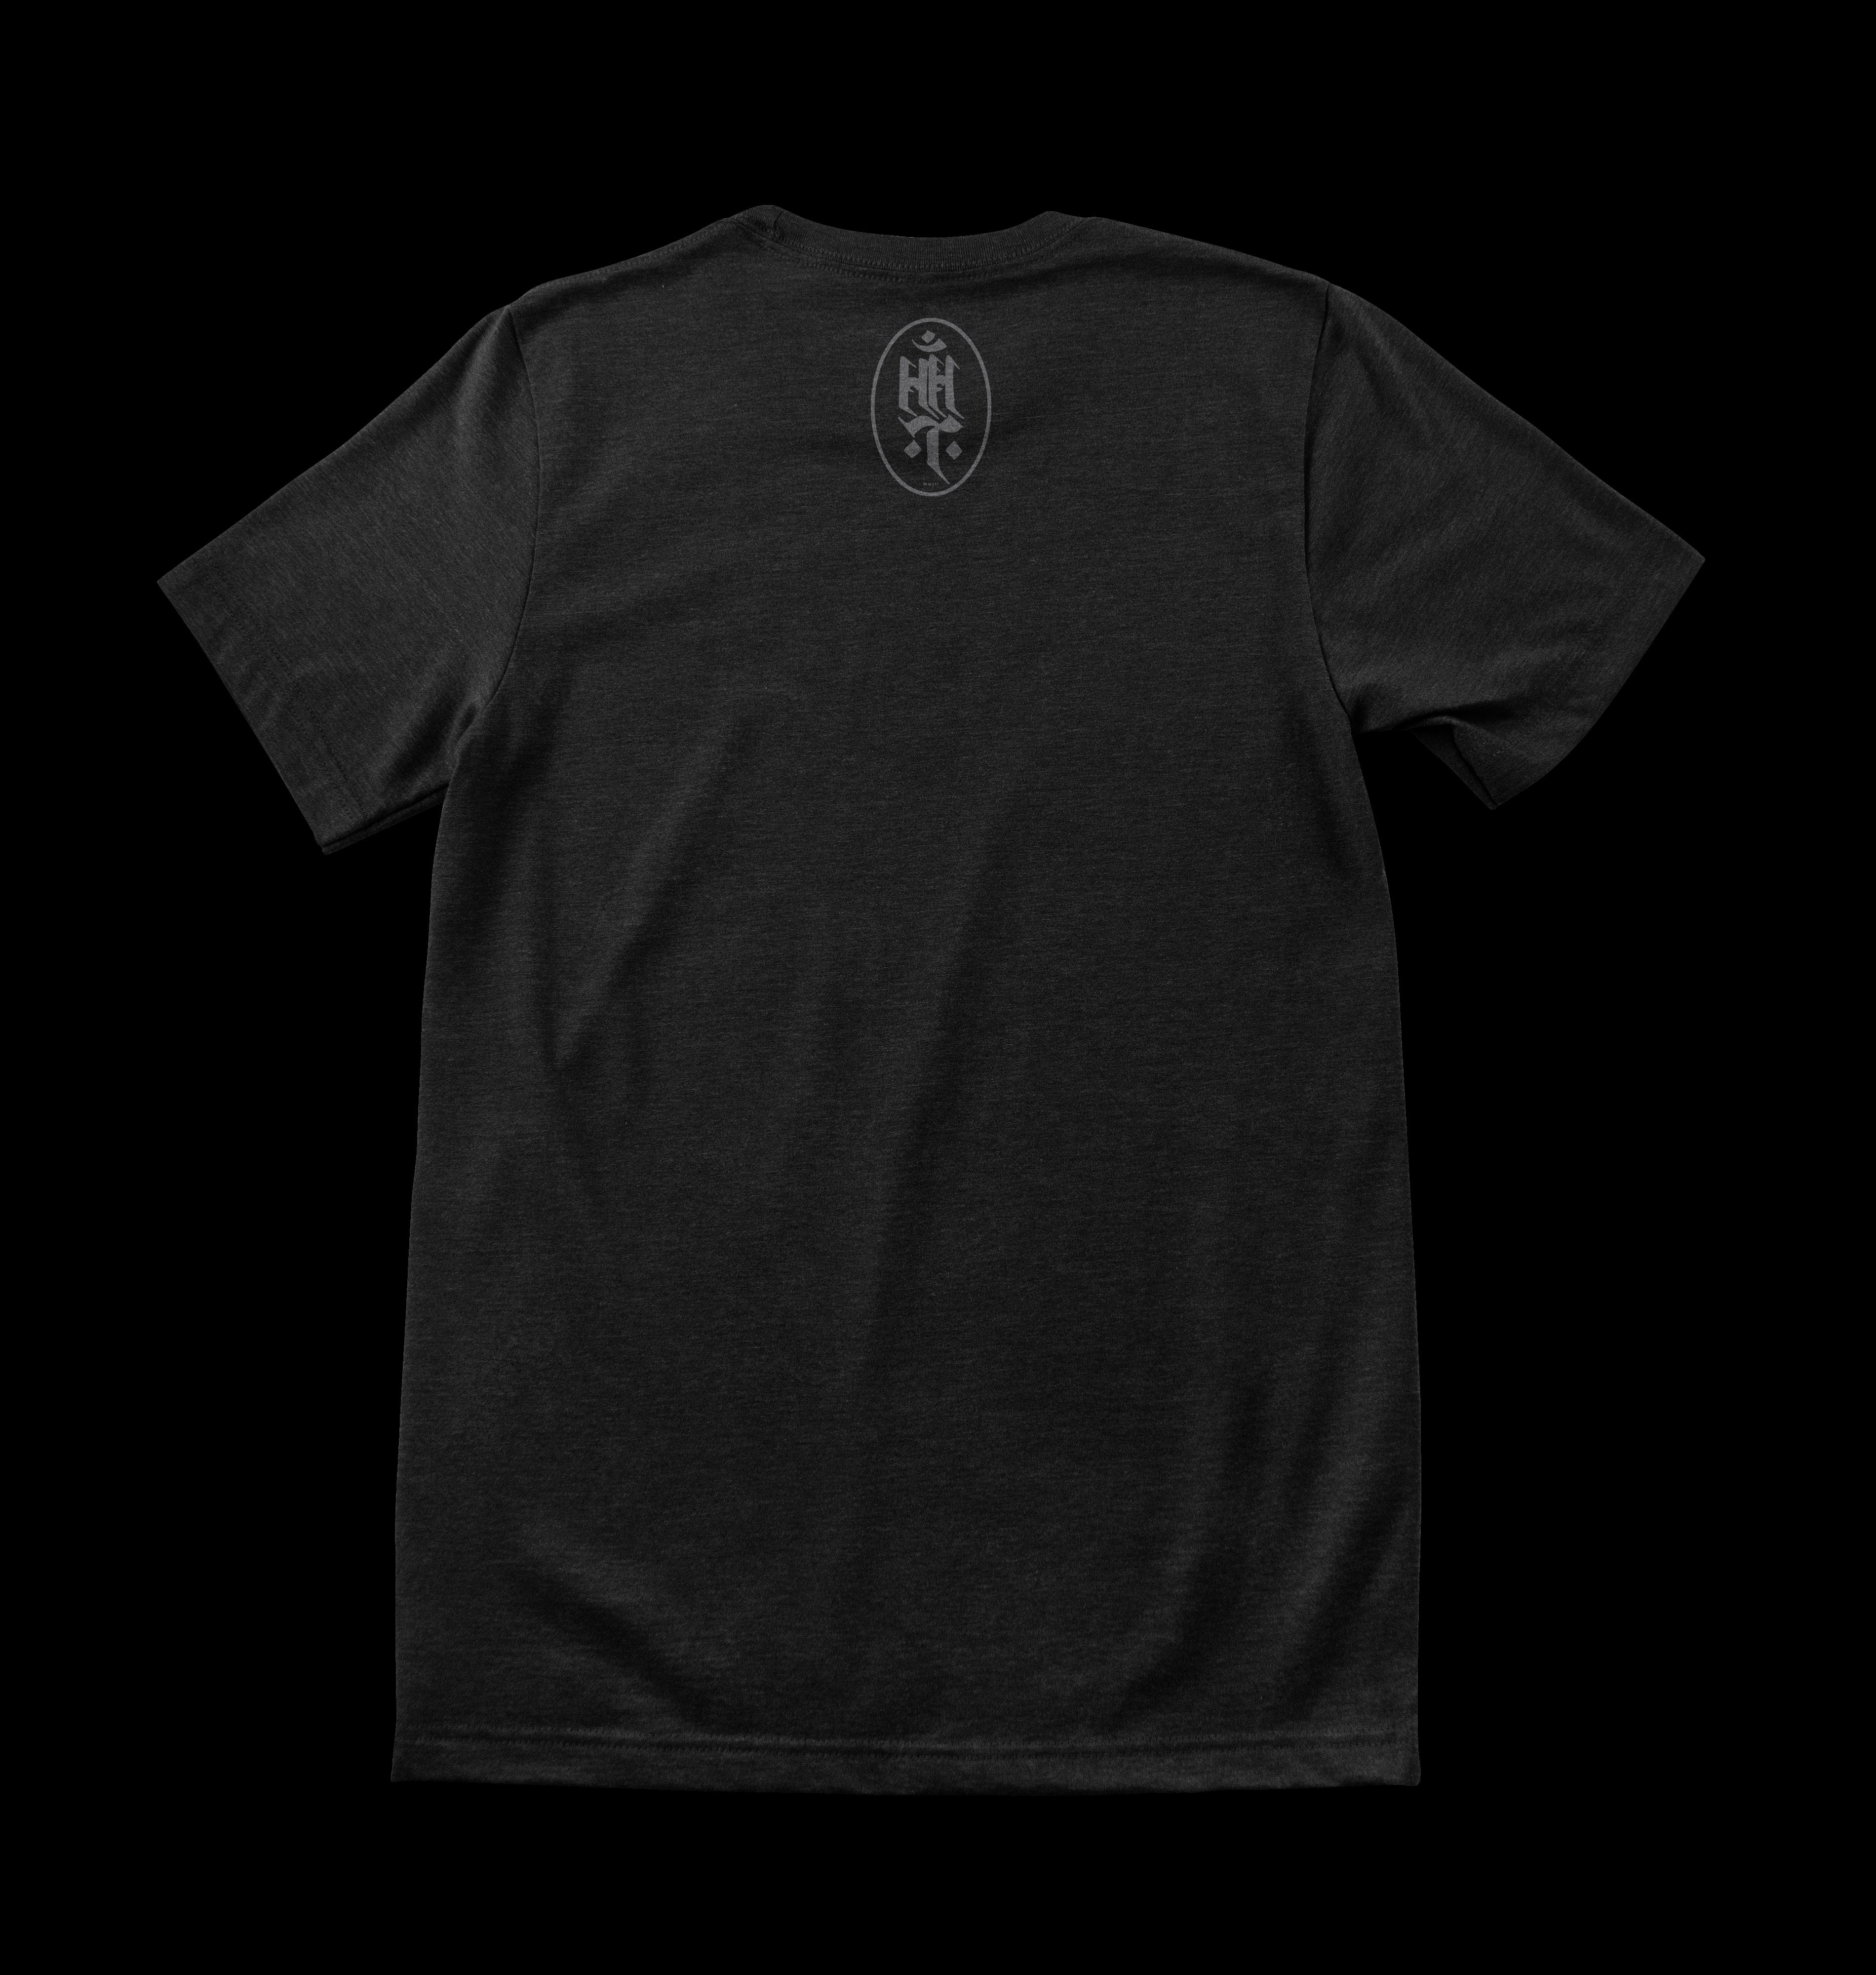 Jeff Cornell short sleeve t-shirt